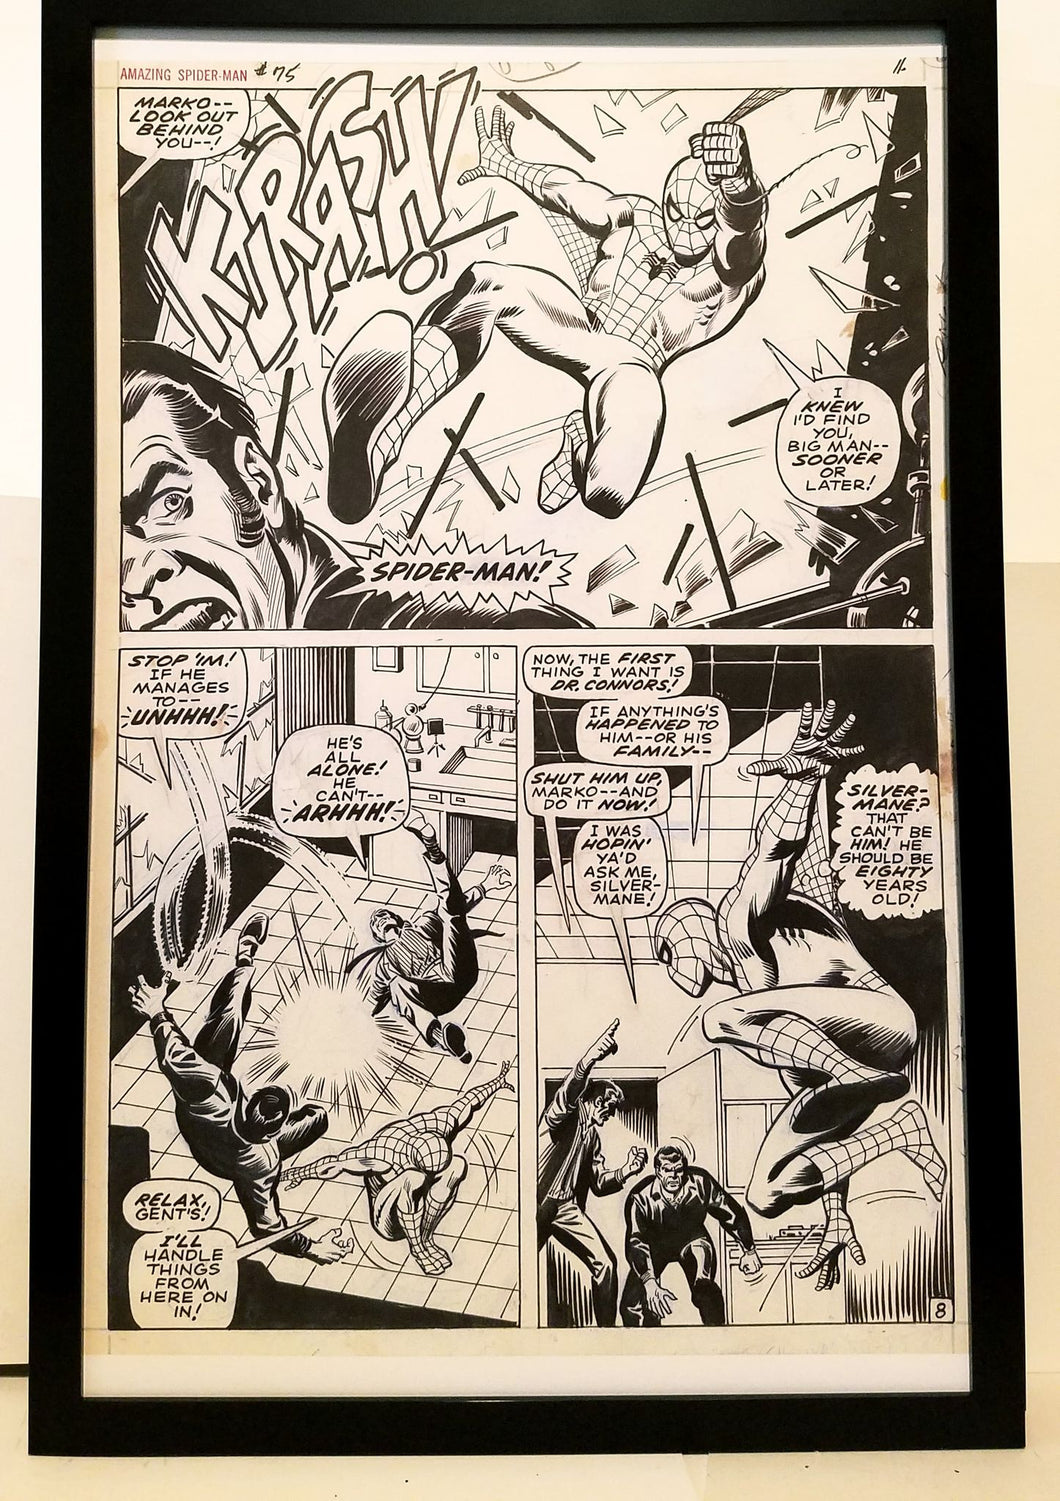 Amazing Spider-Man #75 pg. 8 John Romita 11x17 FRAMED Original Art Poster Marvel Comics